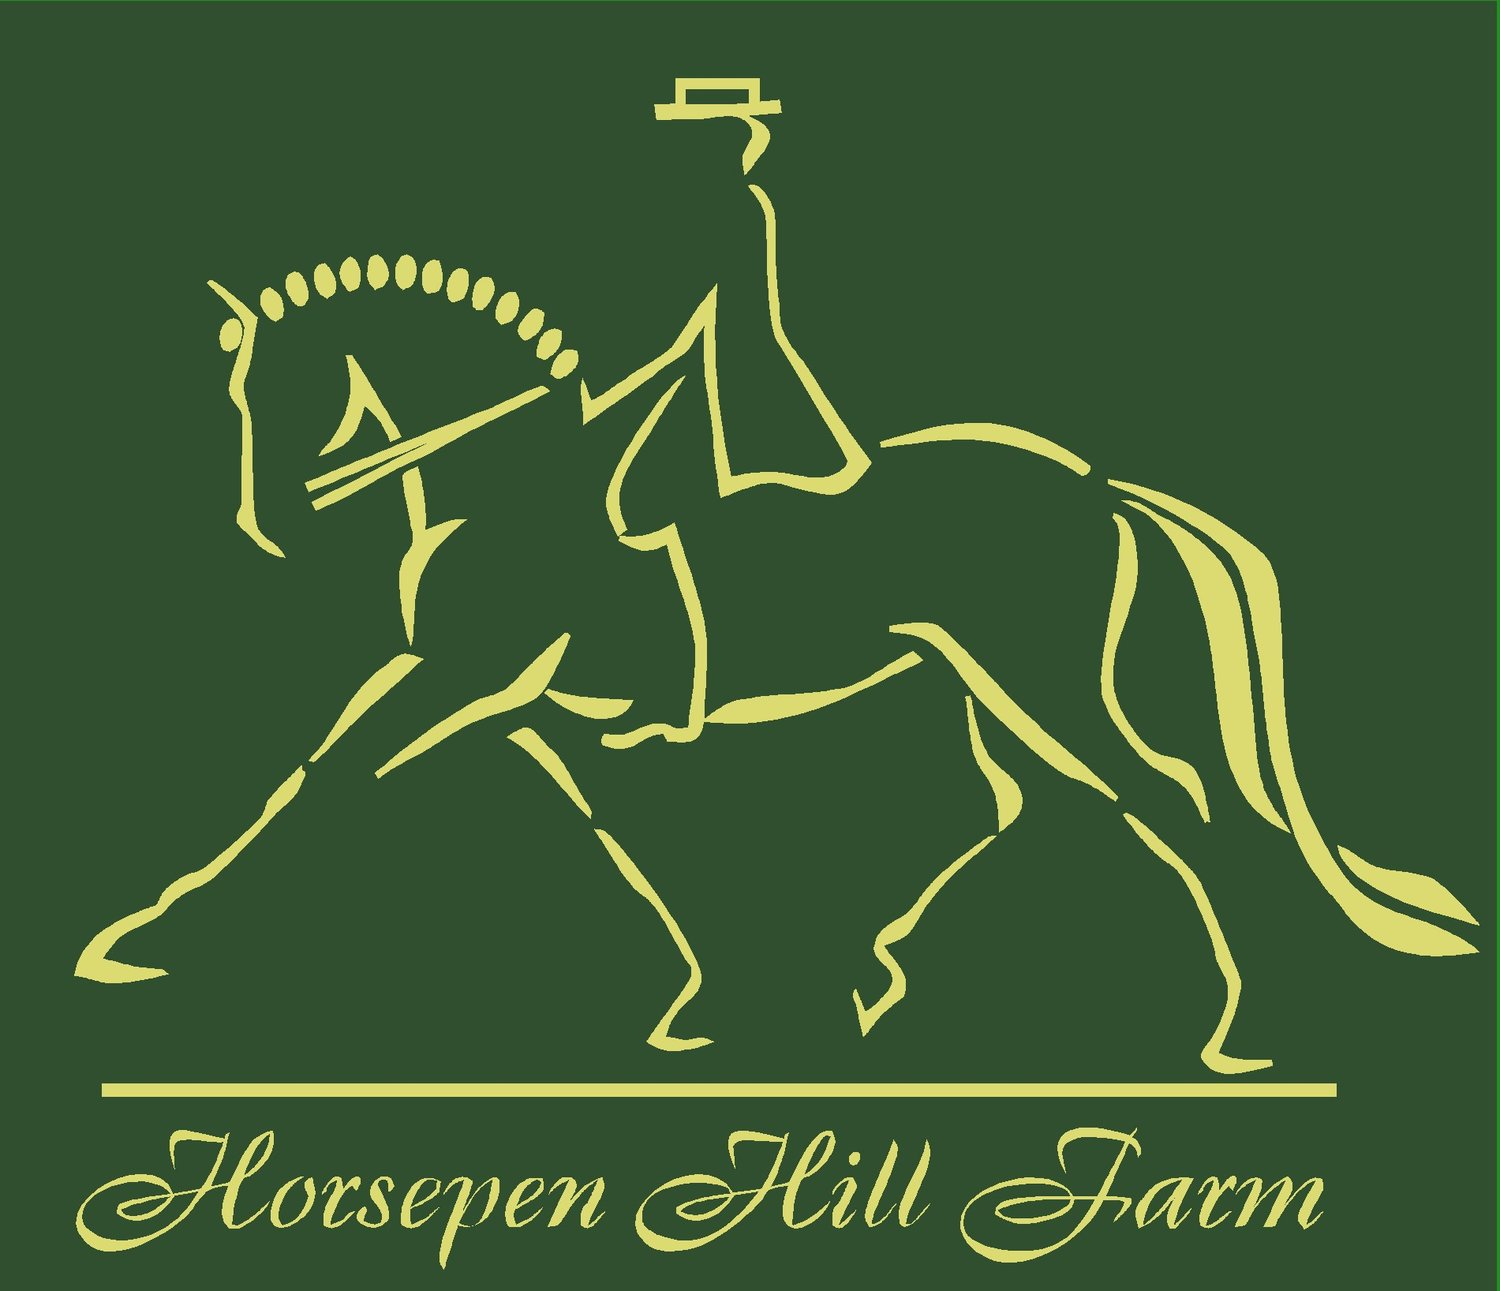 Horsepen Hill Farm